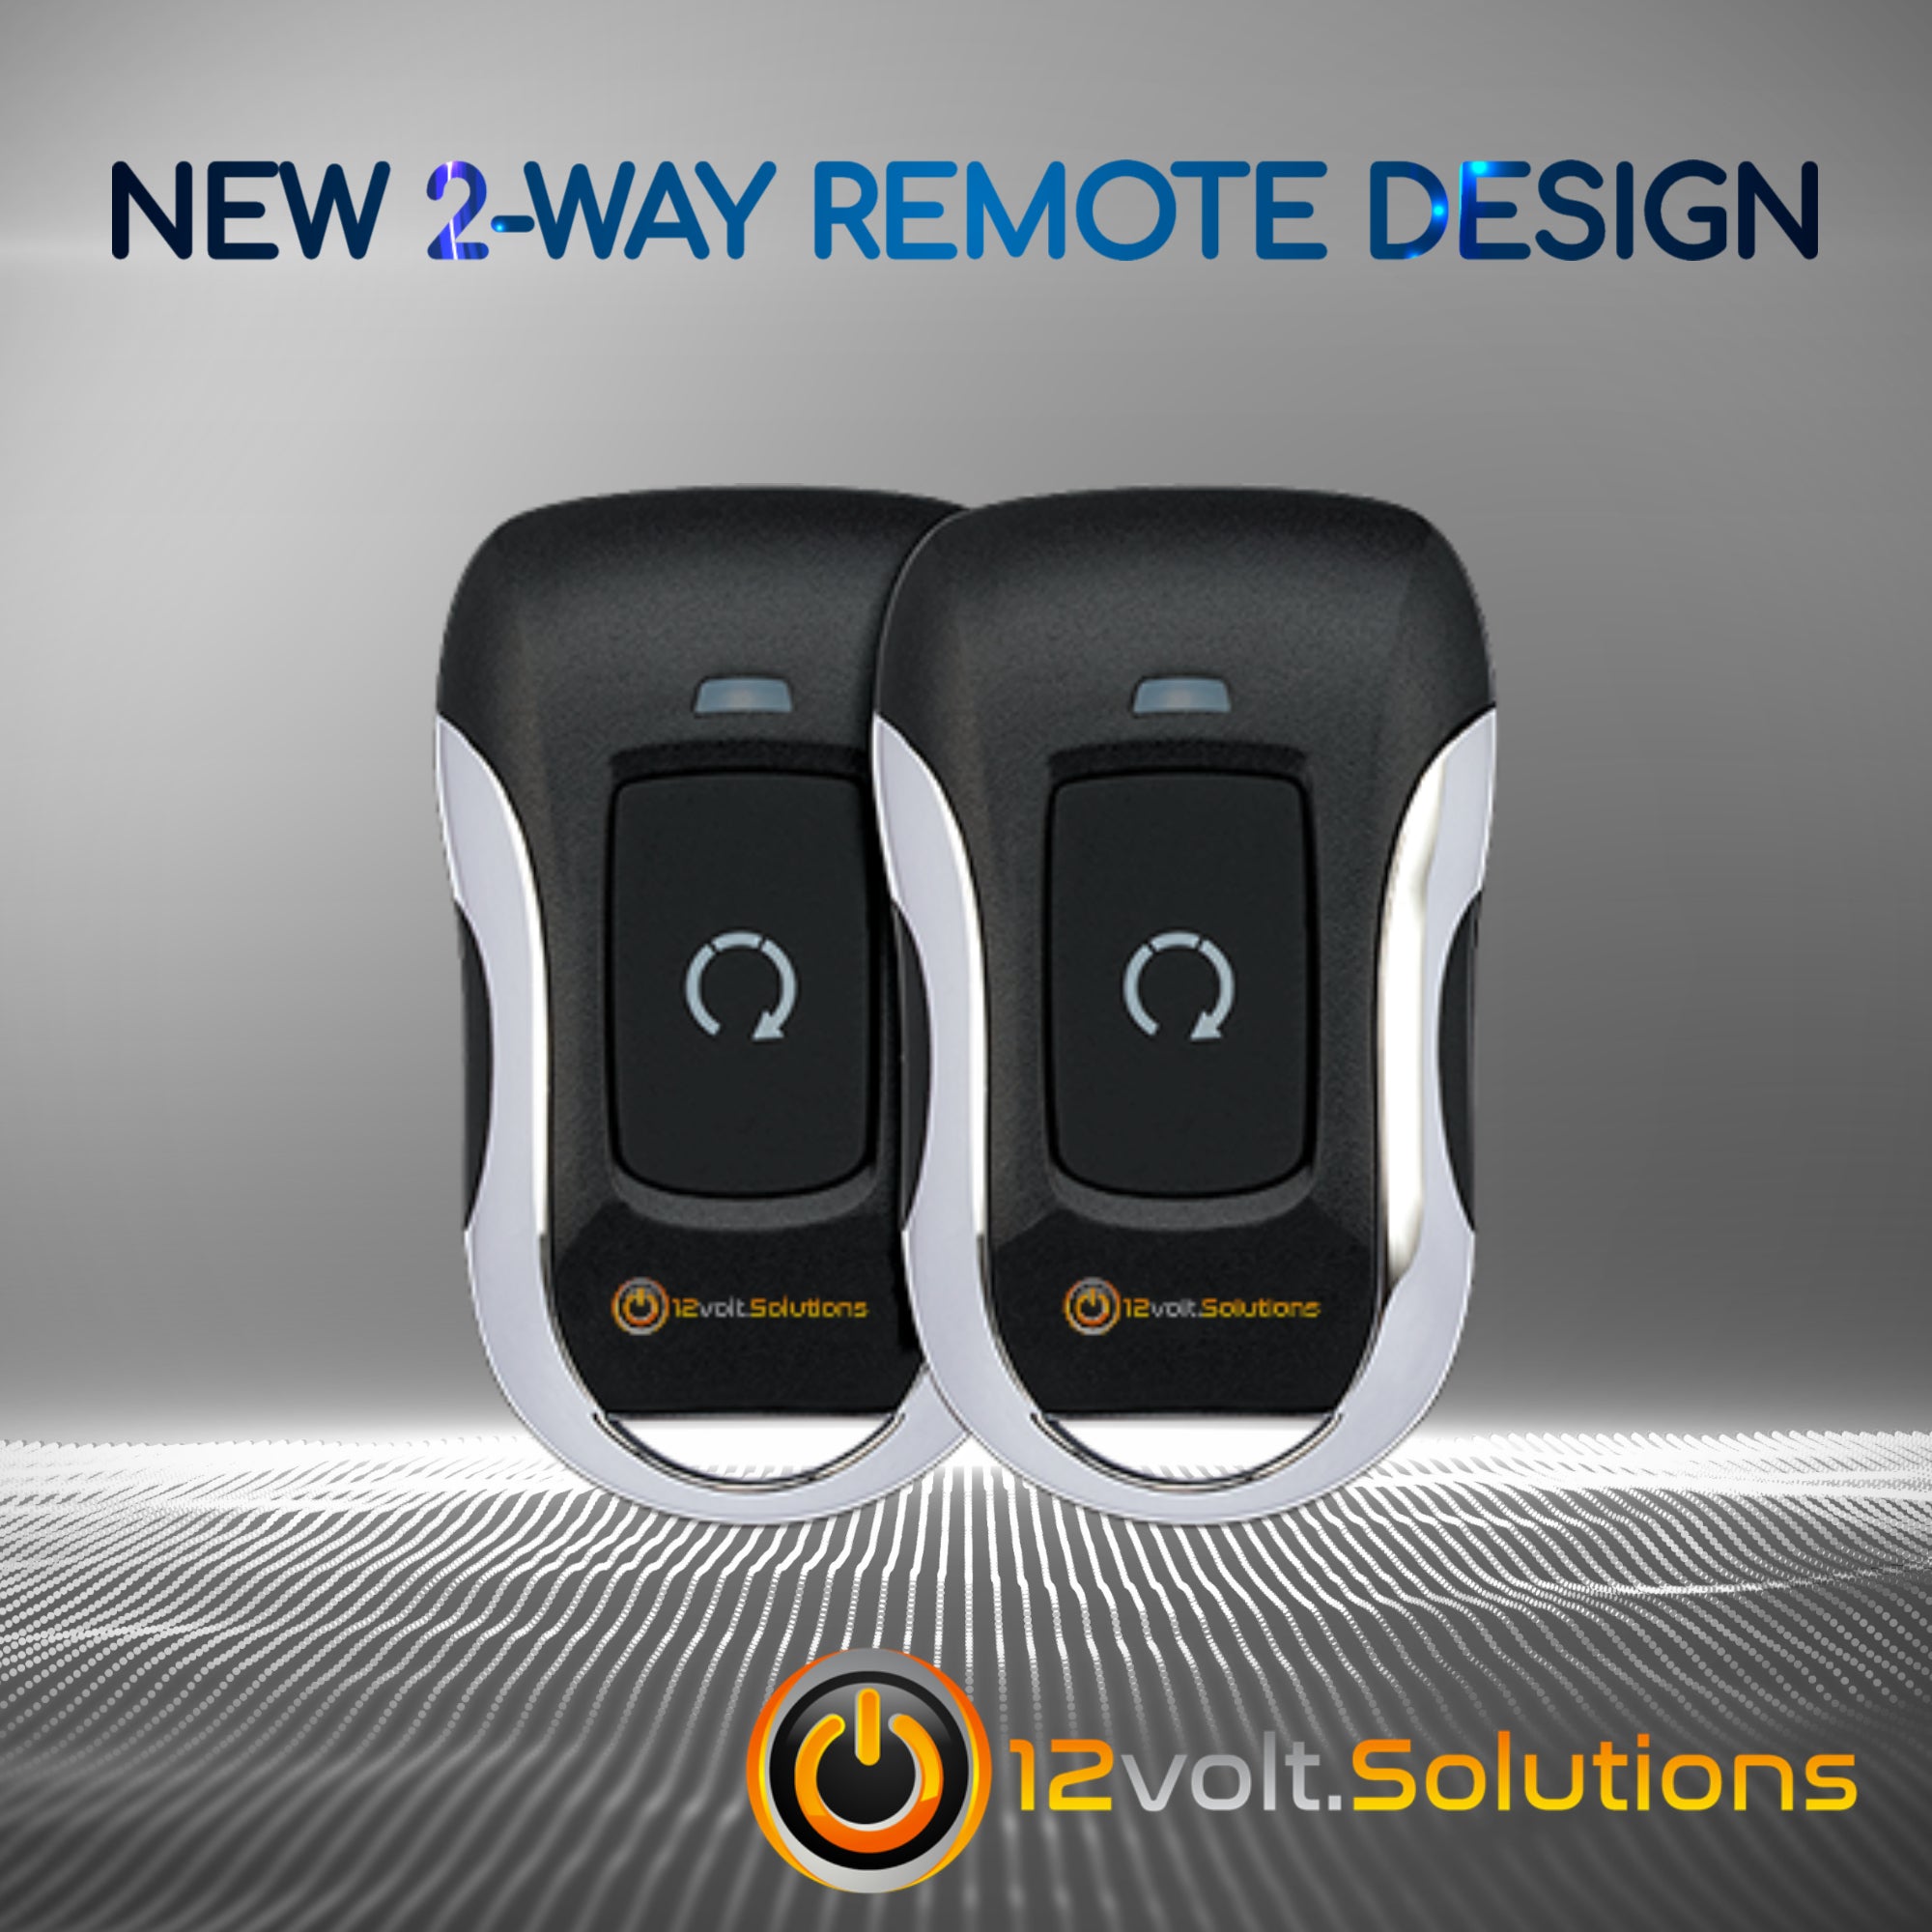 2015-2016 Chevrolet Tahoe Plug & Play Remote Start Kit (Key Start)-12Volt.Solutions